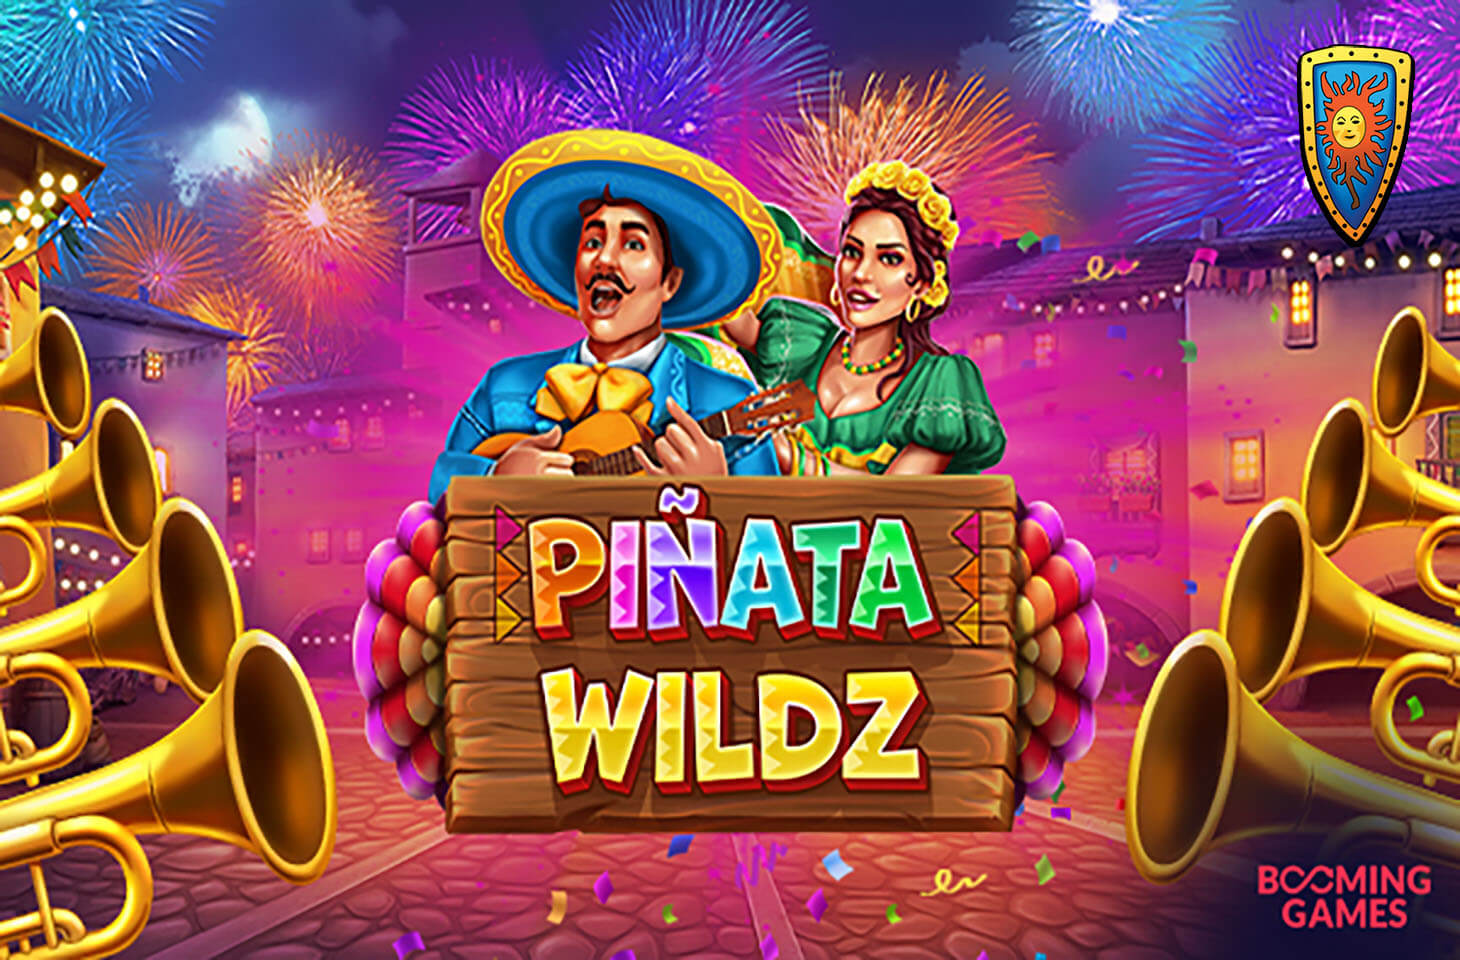 GRAND JACKPOT   MAX WIN - x2.500   Pinata Wildz   NEW Online Slot Epic Big Win - Booming Games